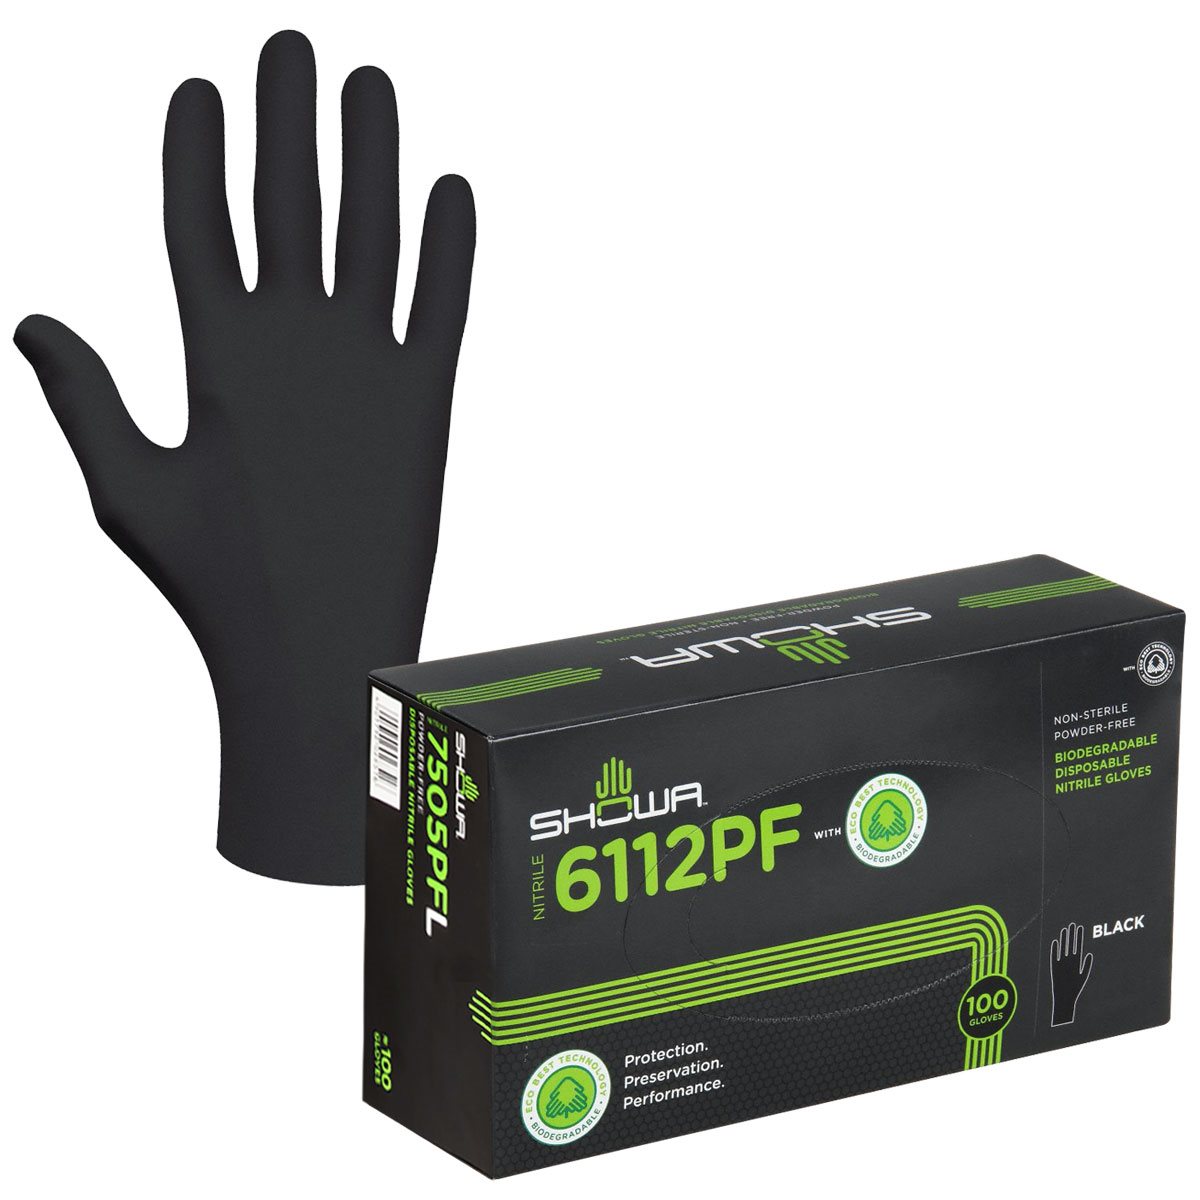 Showa Biodegradable Gloves (100 Pack)